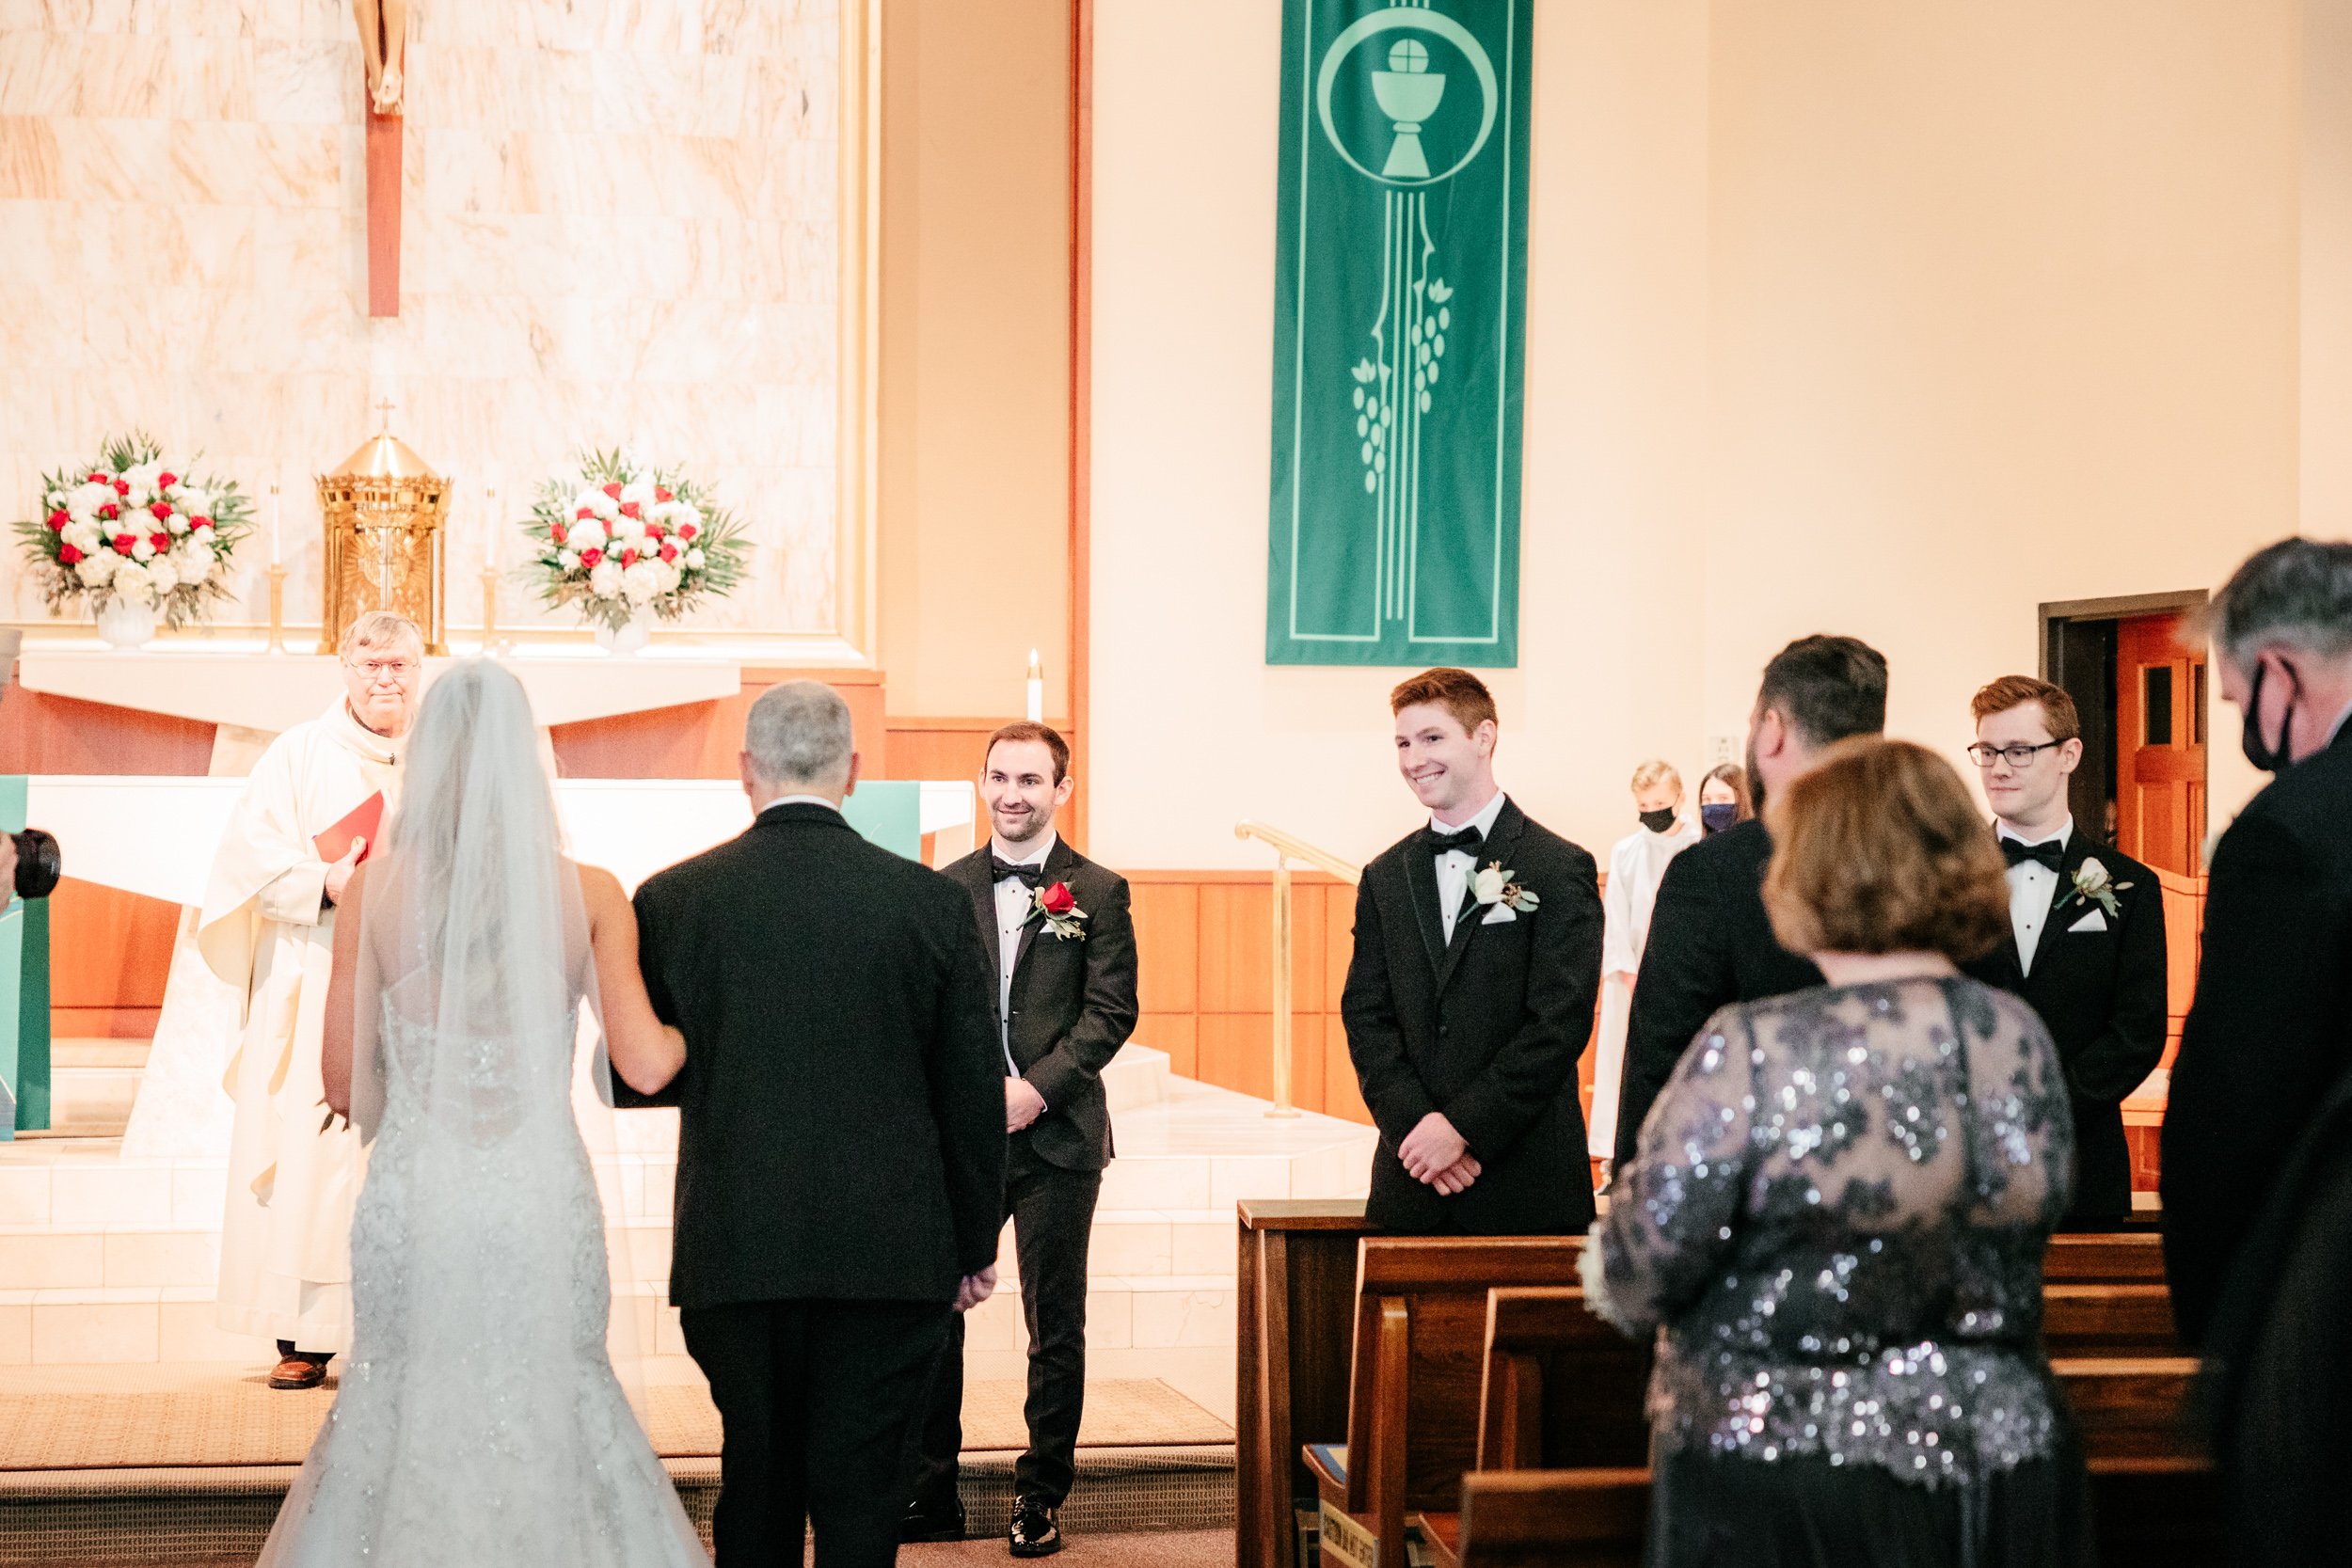 LUCEINS MANOR WEDDING PHOTOGRAPHY - FEB 2021 - 47.jpg